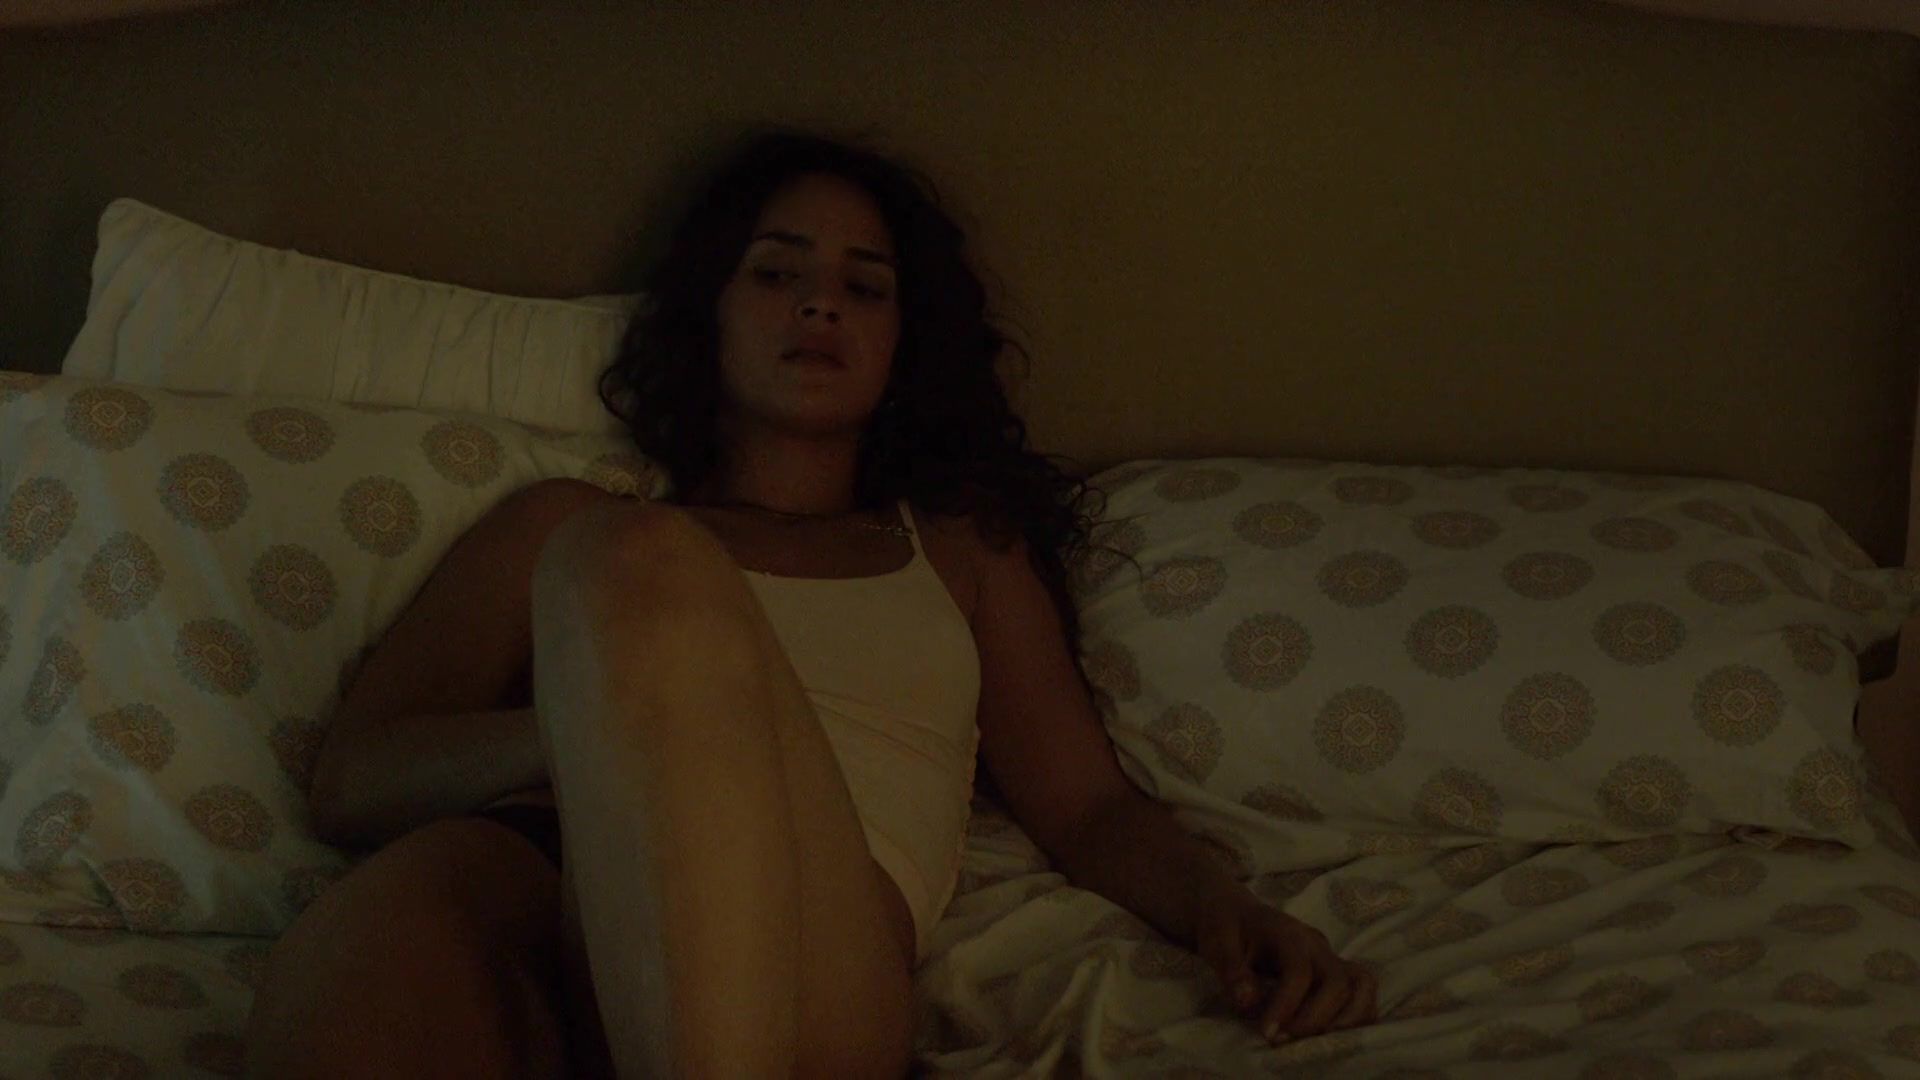 Erotic Adria Arjona, Rachel Mcadams - True Detective (2015) s2e1 Amatures Gone Wild